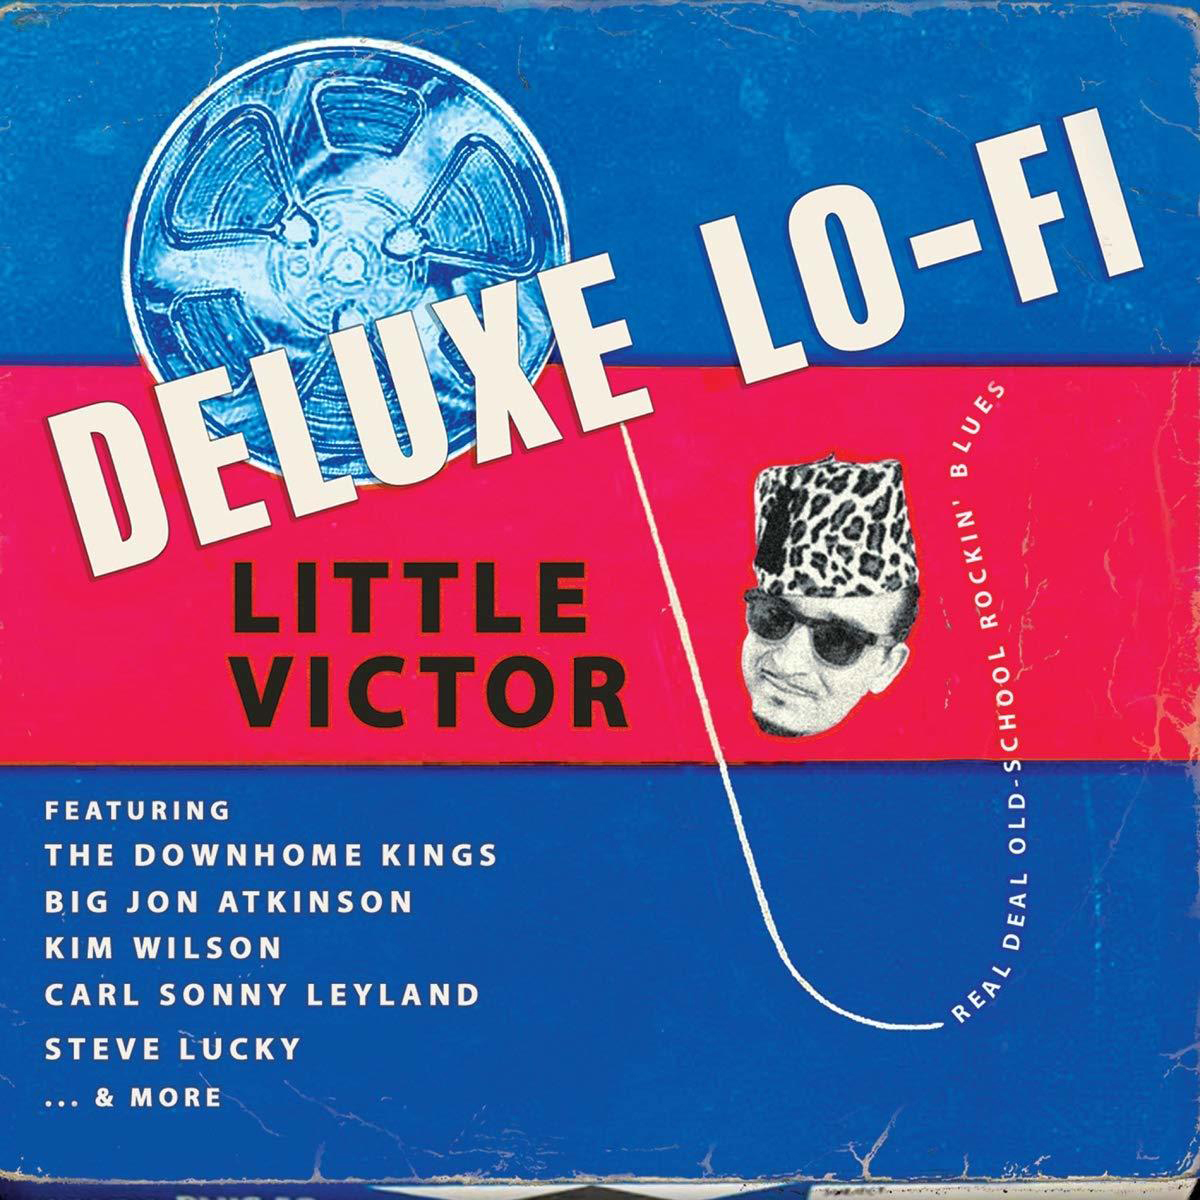 Lo-Fi Victor (Vinyl) - - Deluxe Little